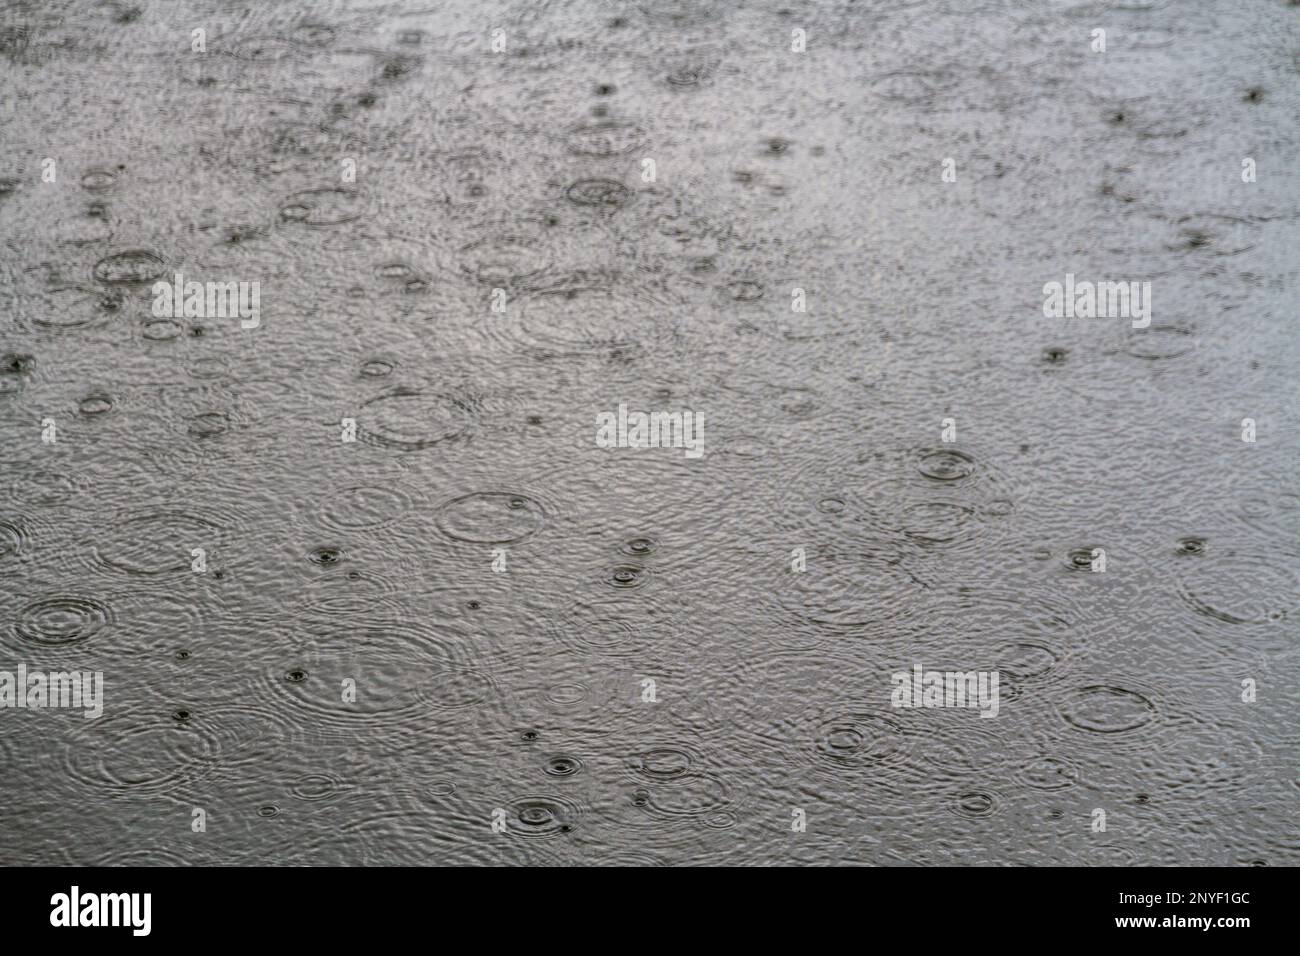 Raindrops falling onto water. Stock Photo